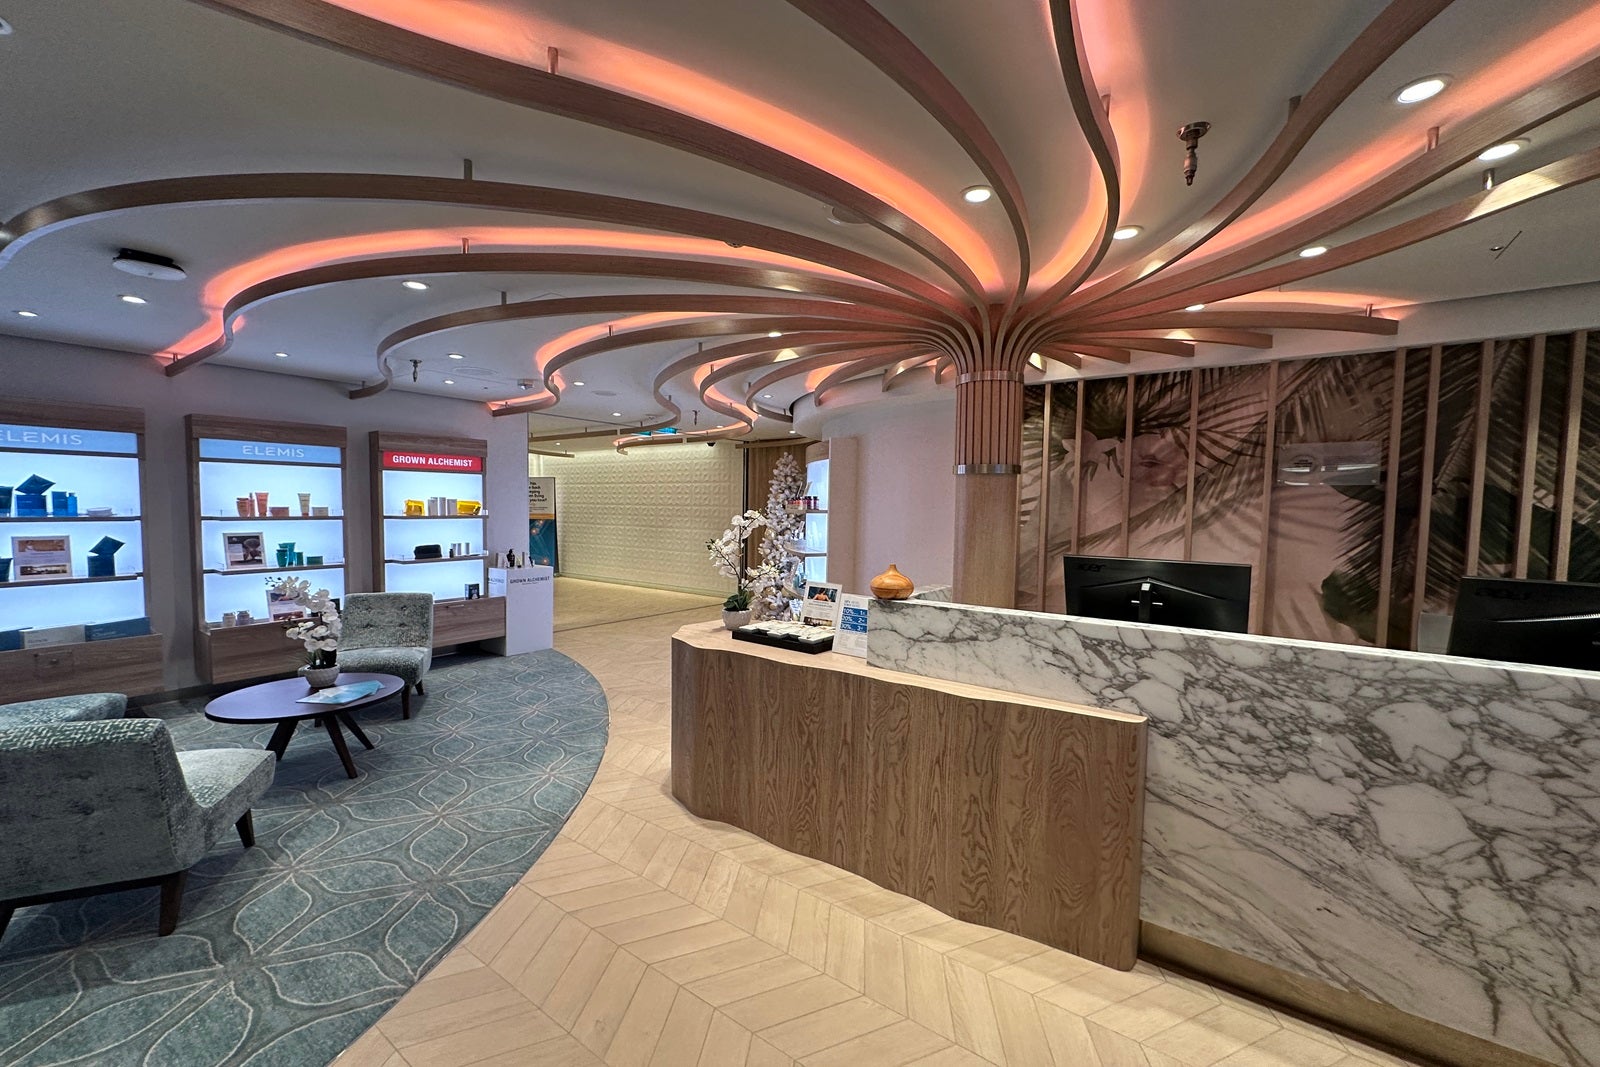 Cloud 9 Spa, Carnival Cruise Line’s spa and health facility